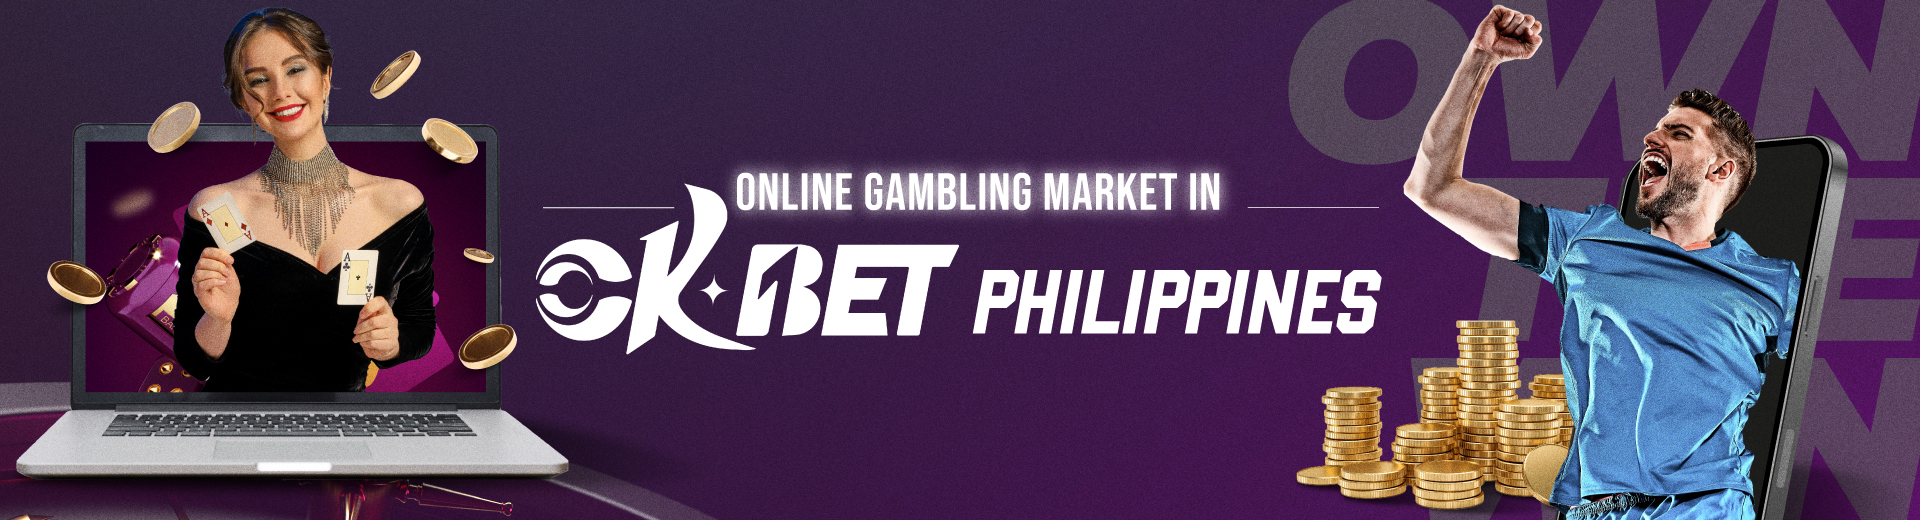 New Technologies Online Gambling Market in OKBET Philippines - OKBET online gambling